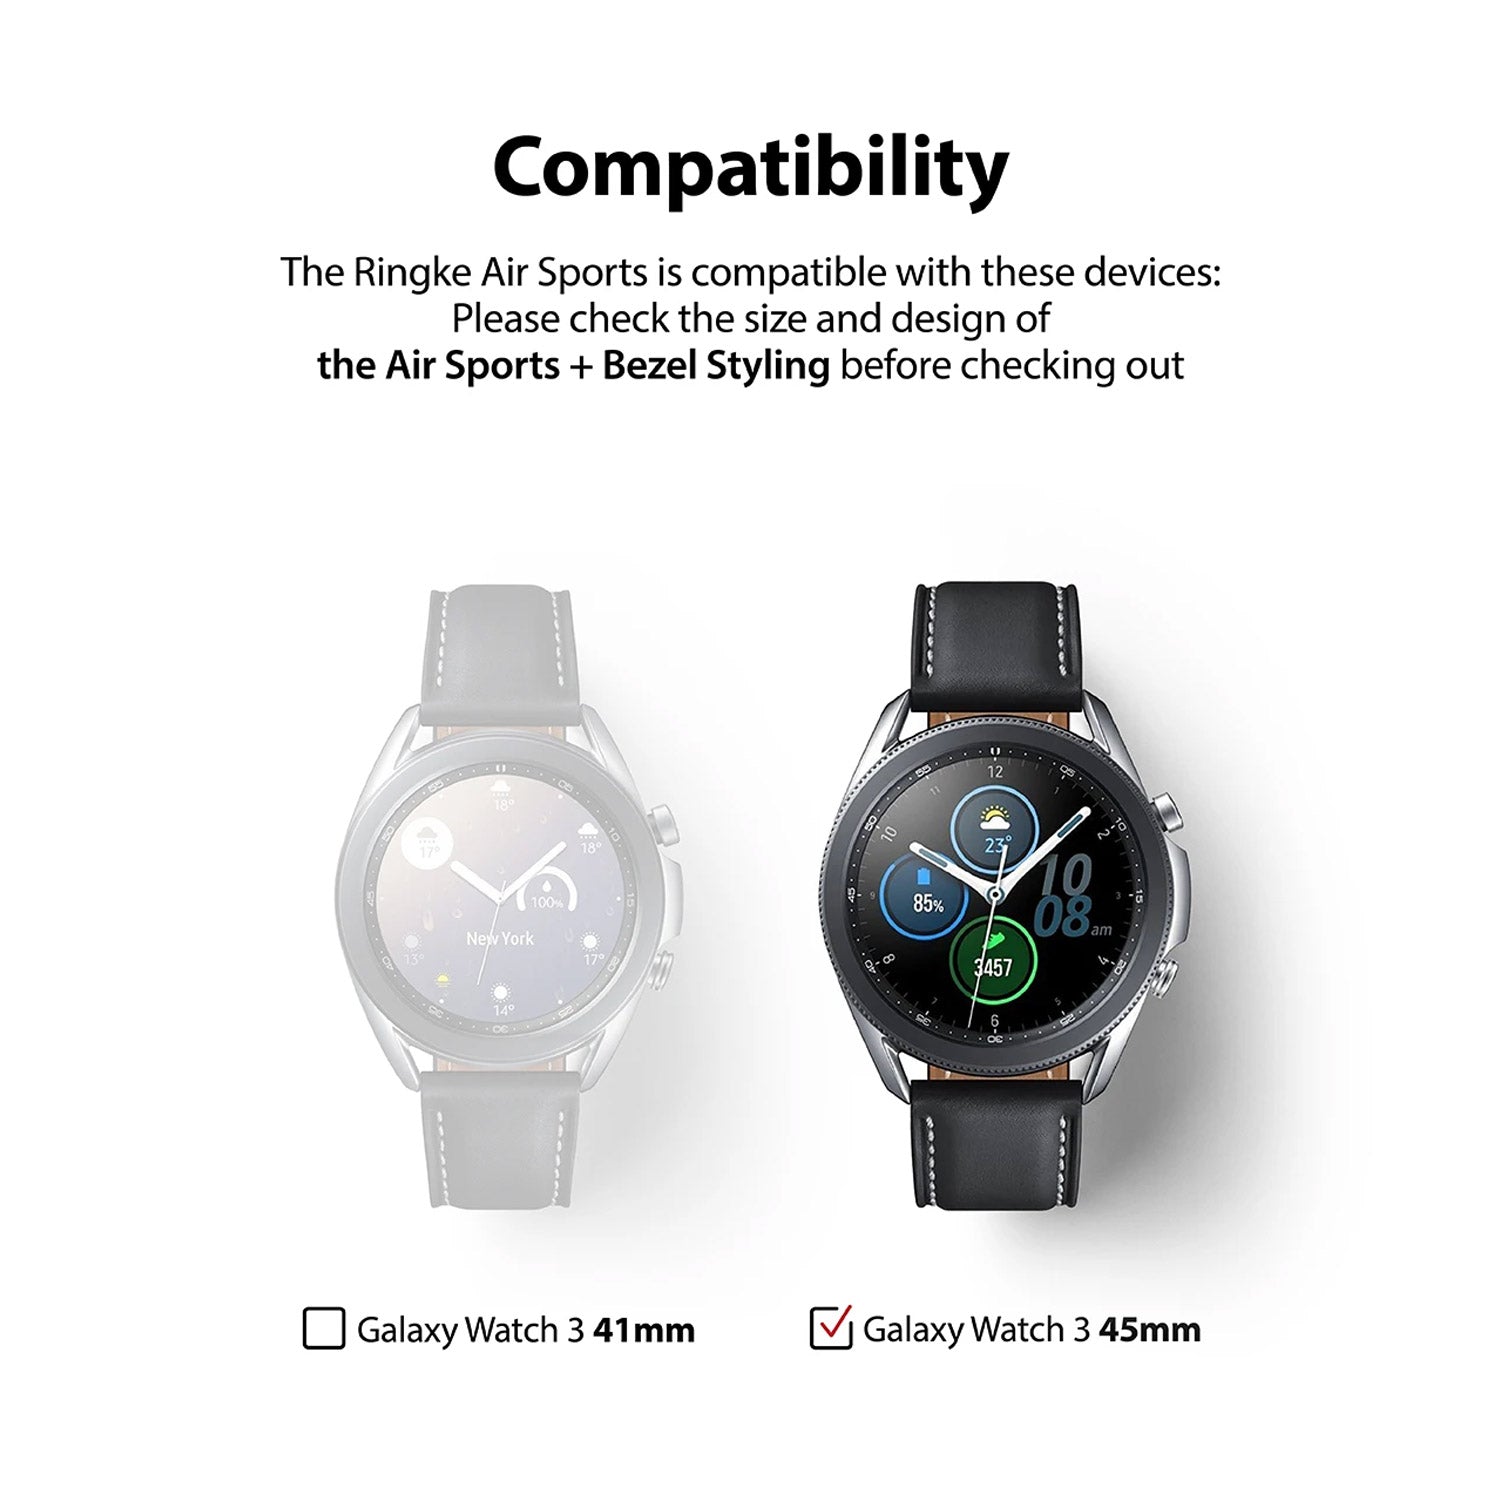 Ringke Galaxy Watch 3 45mm Styling 10 Air Sports Matte Clear Case+ Bezel Combo Pack